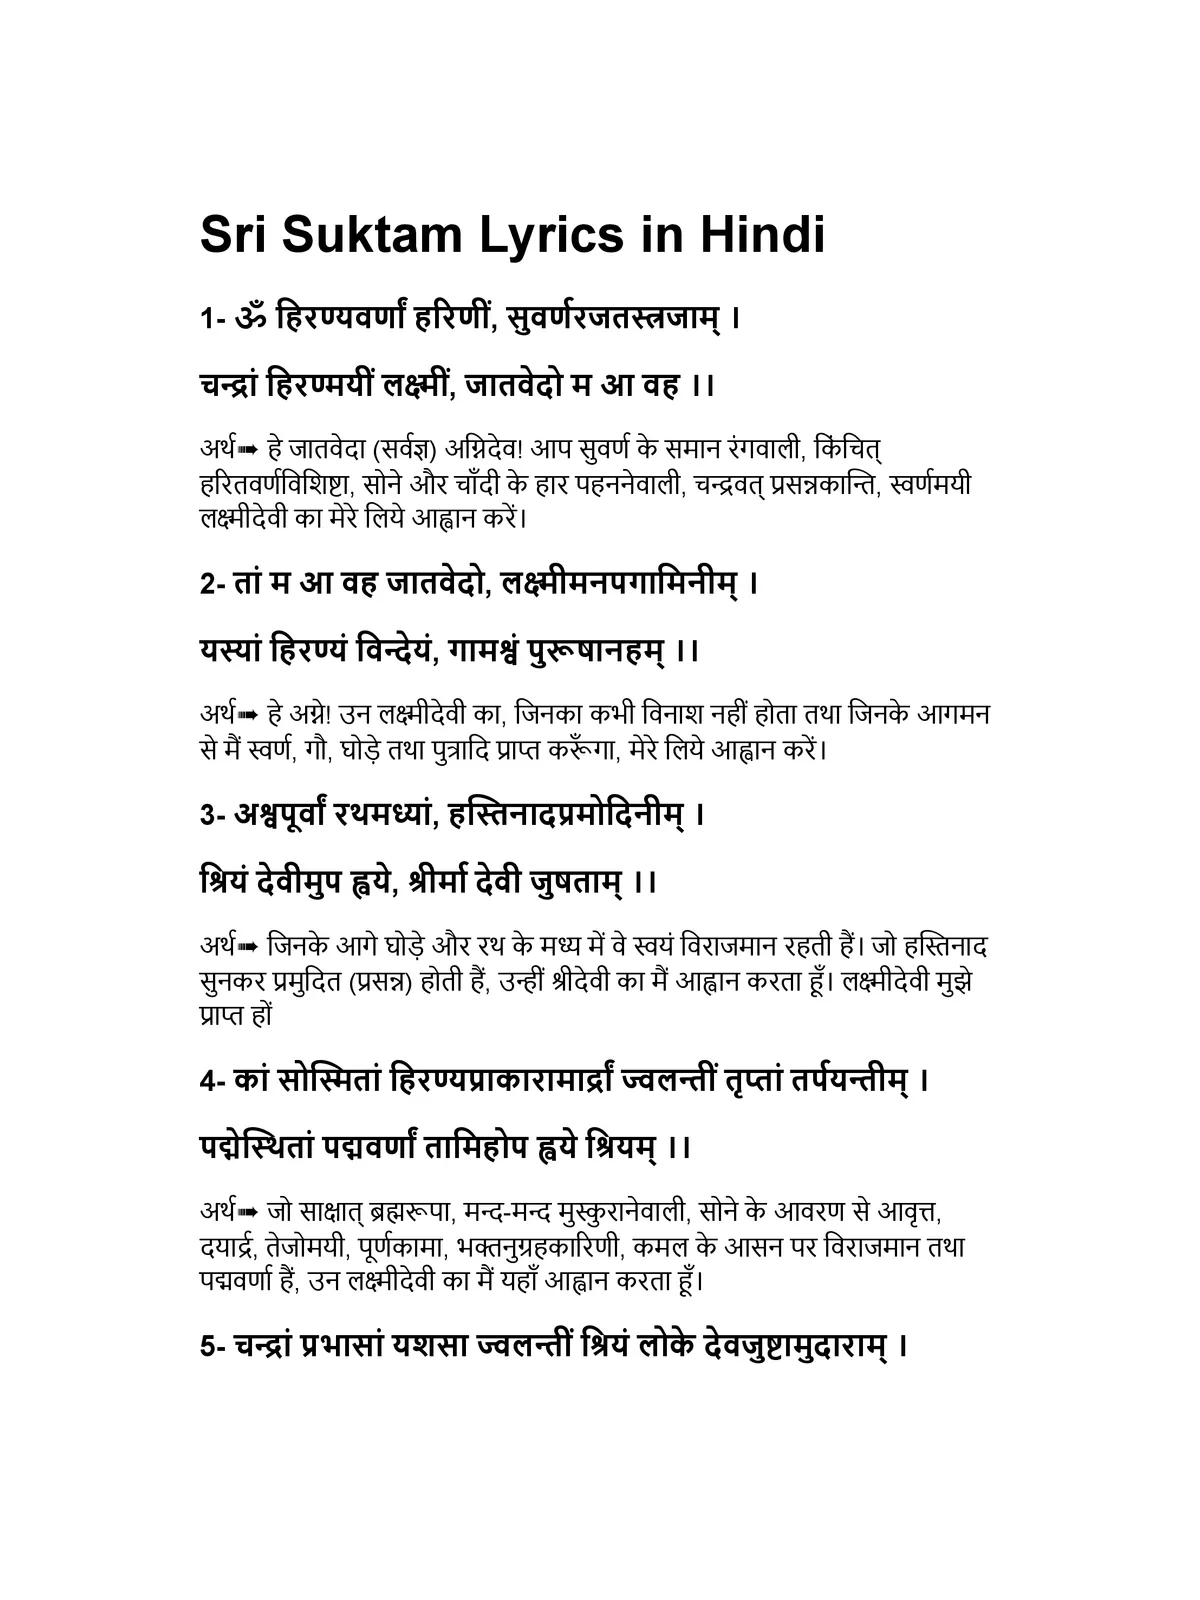 श्रीसूक्त 16 मंत्र – Sri Suktam 16 Mantra